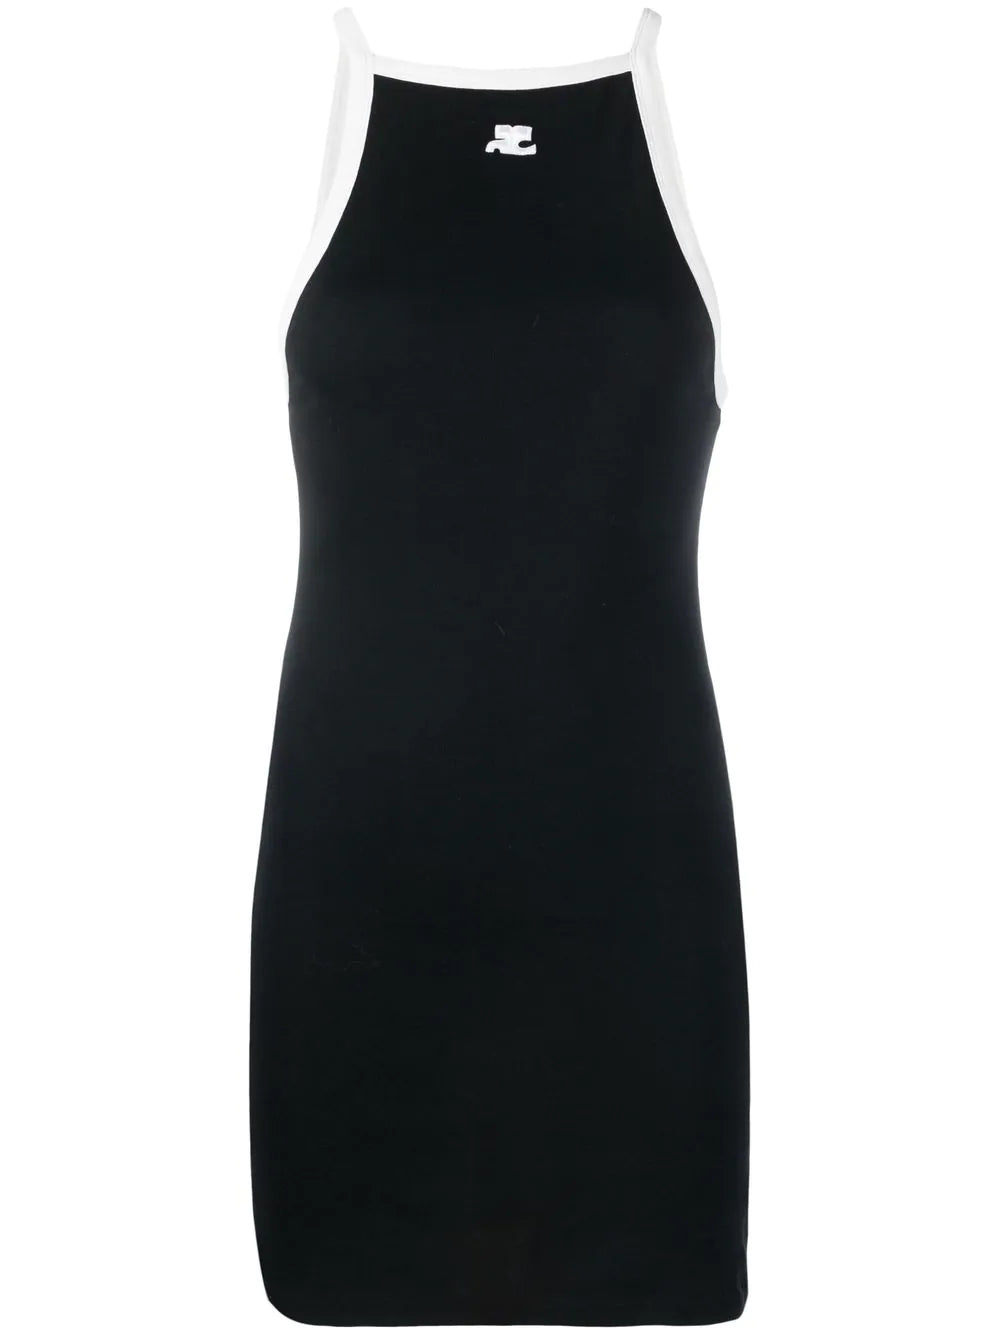 COURREGES WOMEN Light Ribbed Contrast Dress Black/White - MAISONDEFASHION.COM